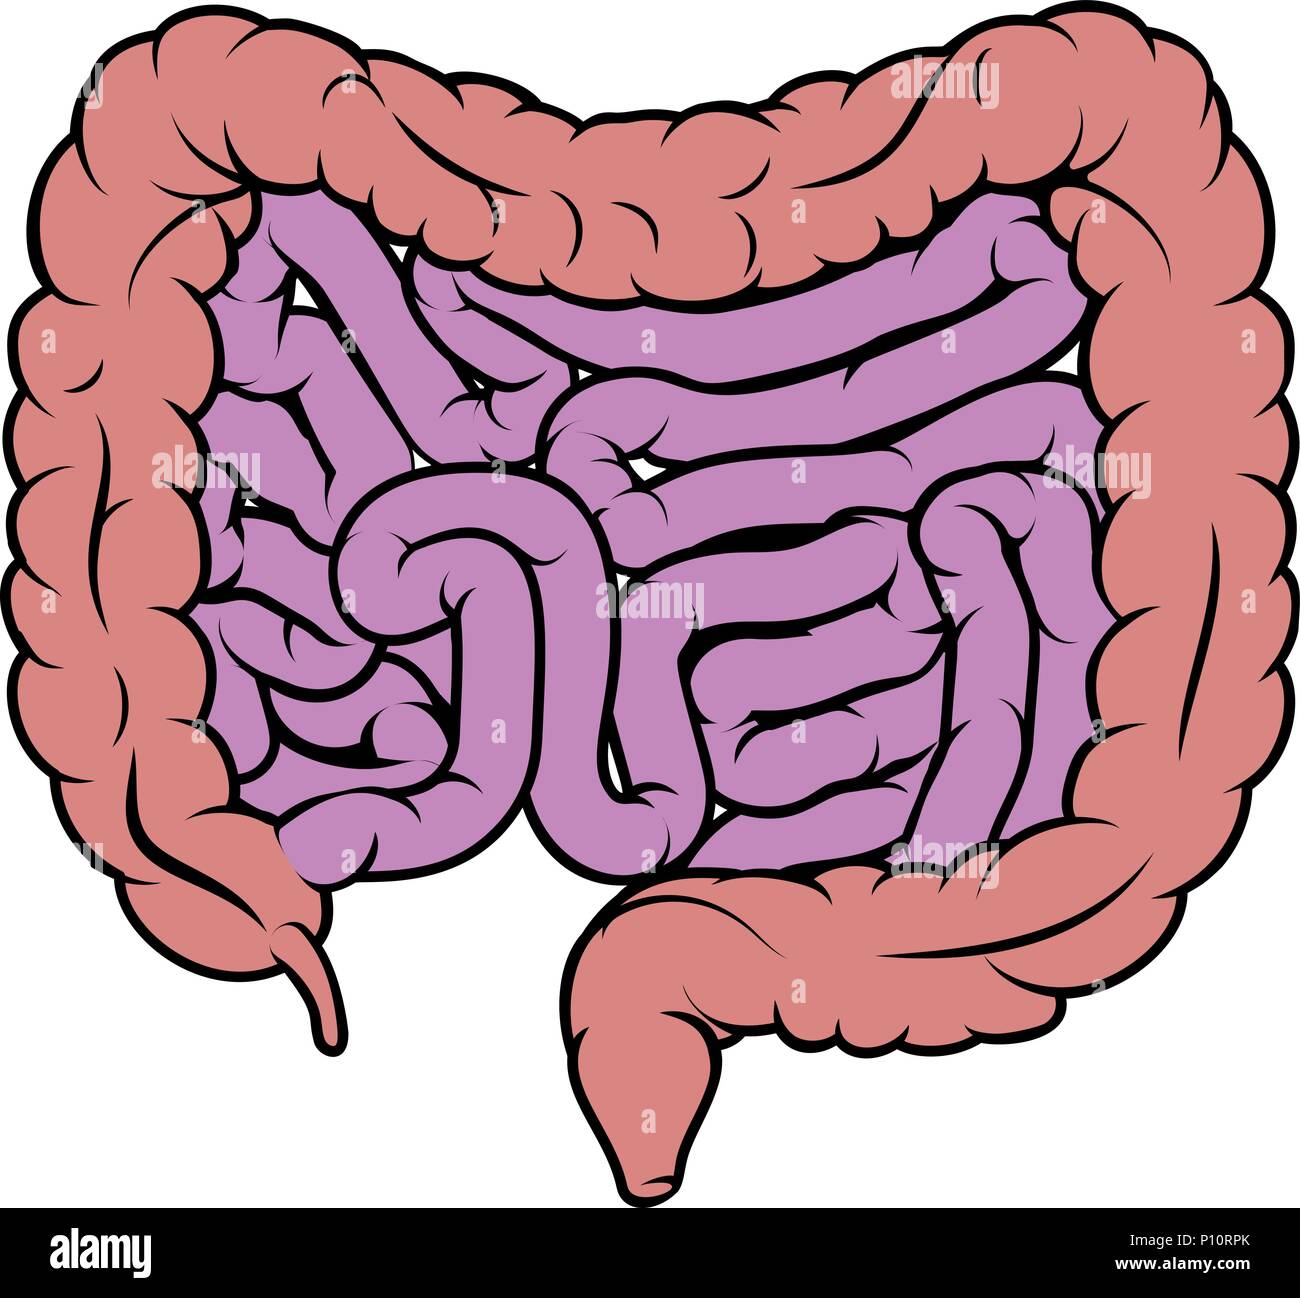 Intestine Gut Digestive System Diagram Stock Vector